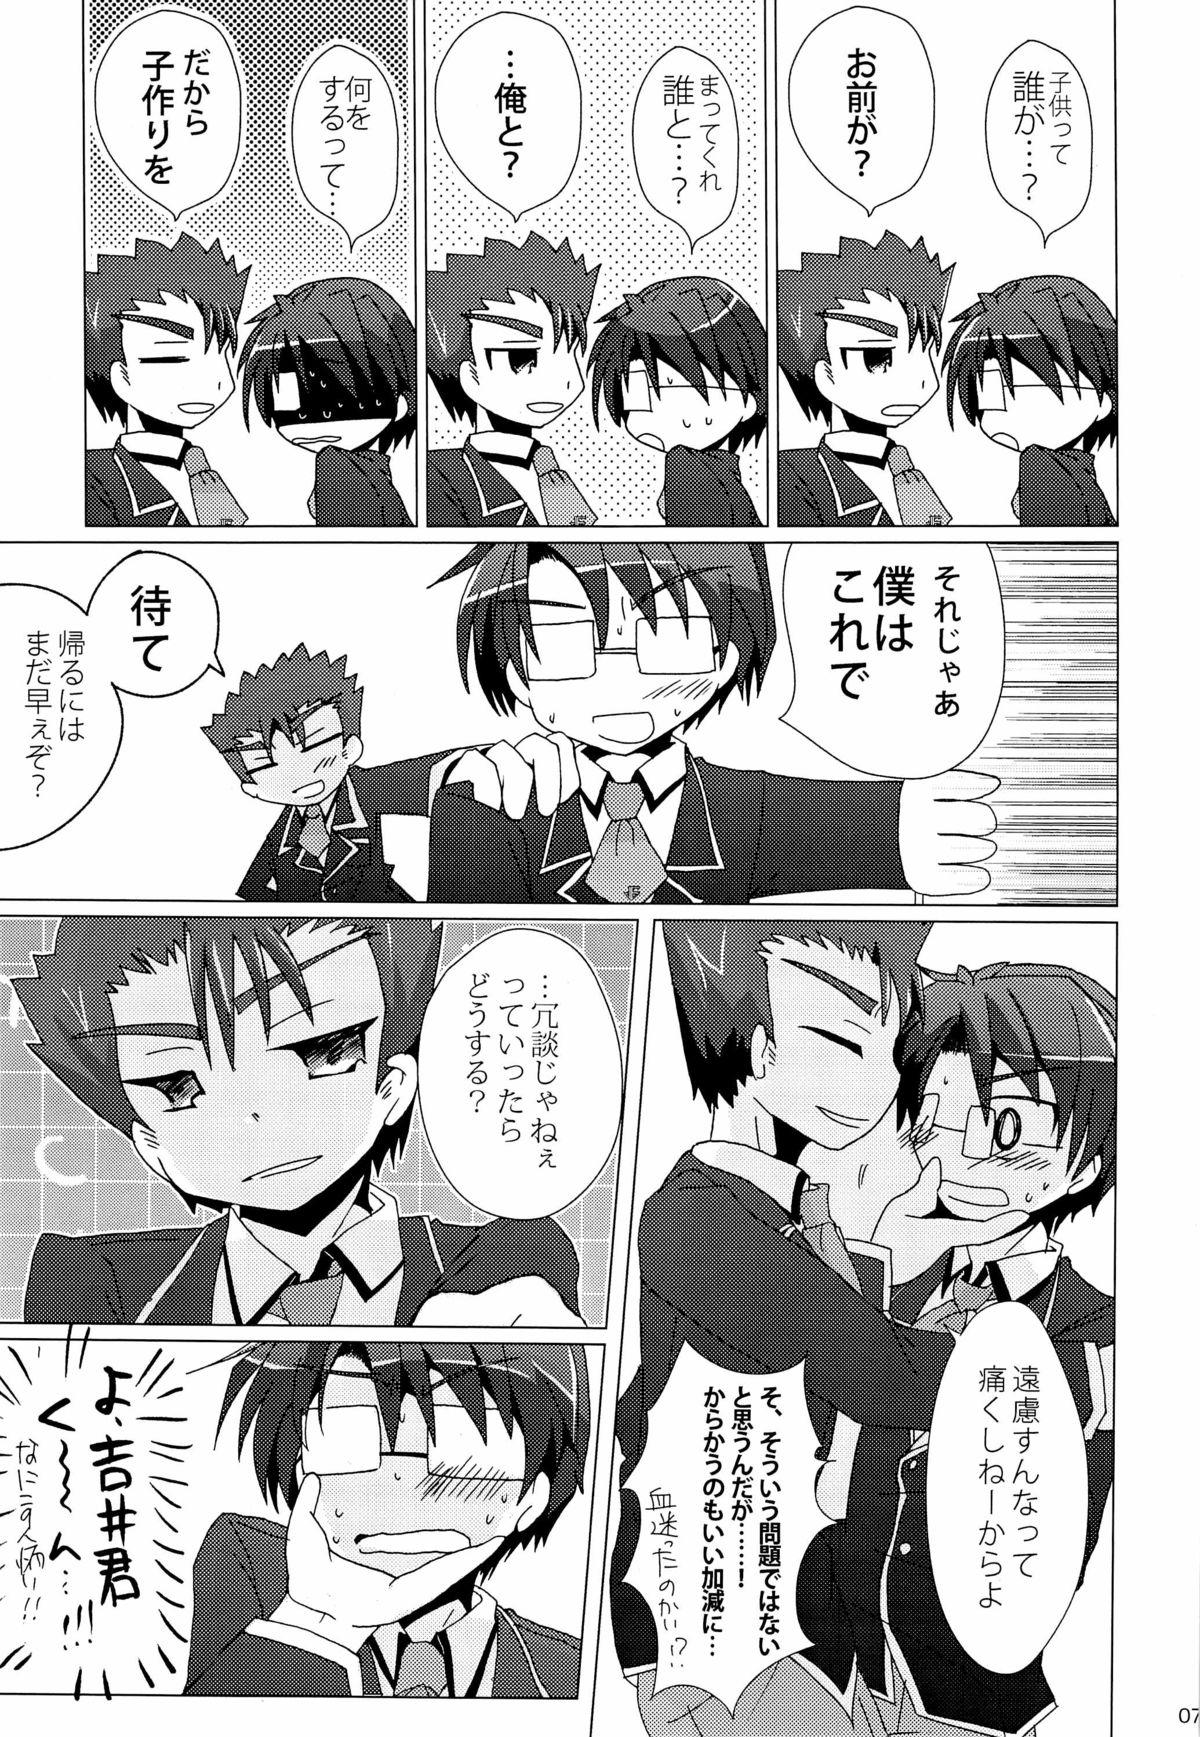 Licking 「では、僕が相手をして･･･え？」 - Baka to test to shoukanjuu Hardon - Page 9